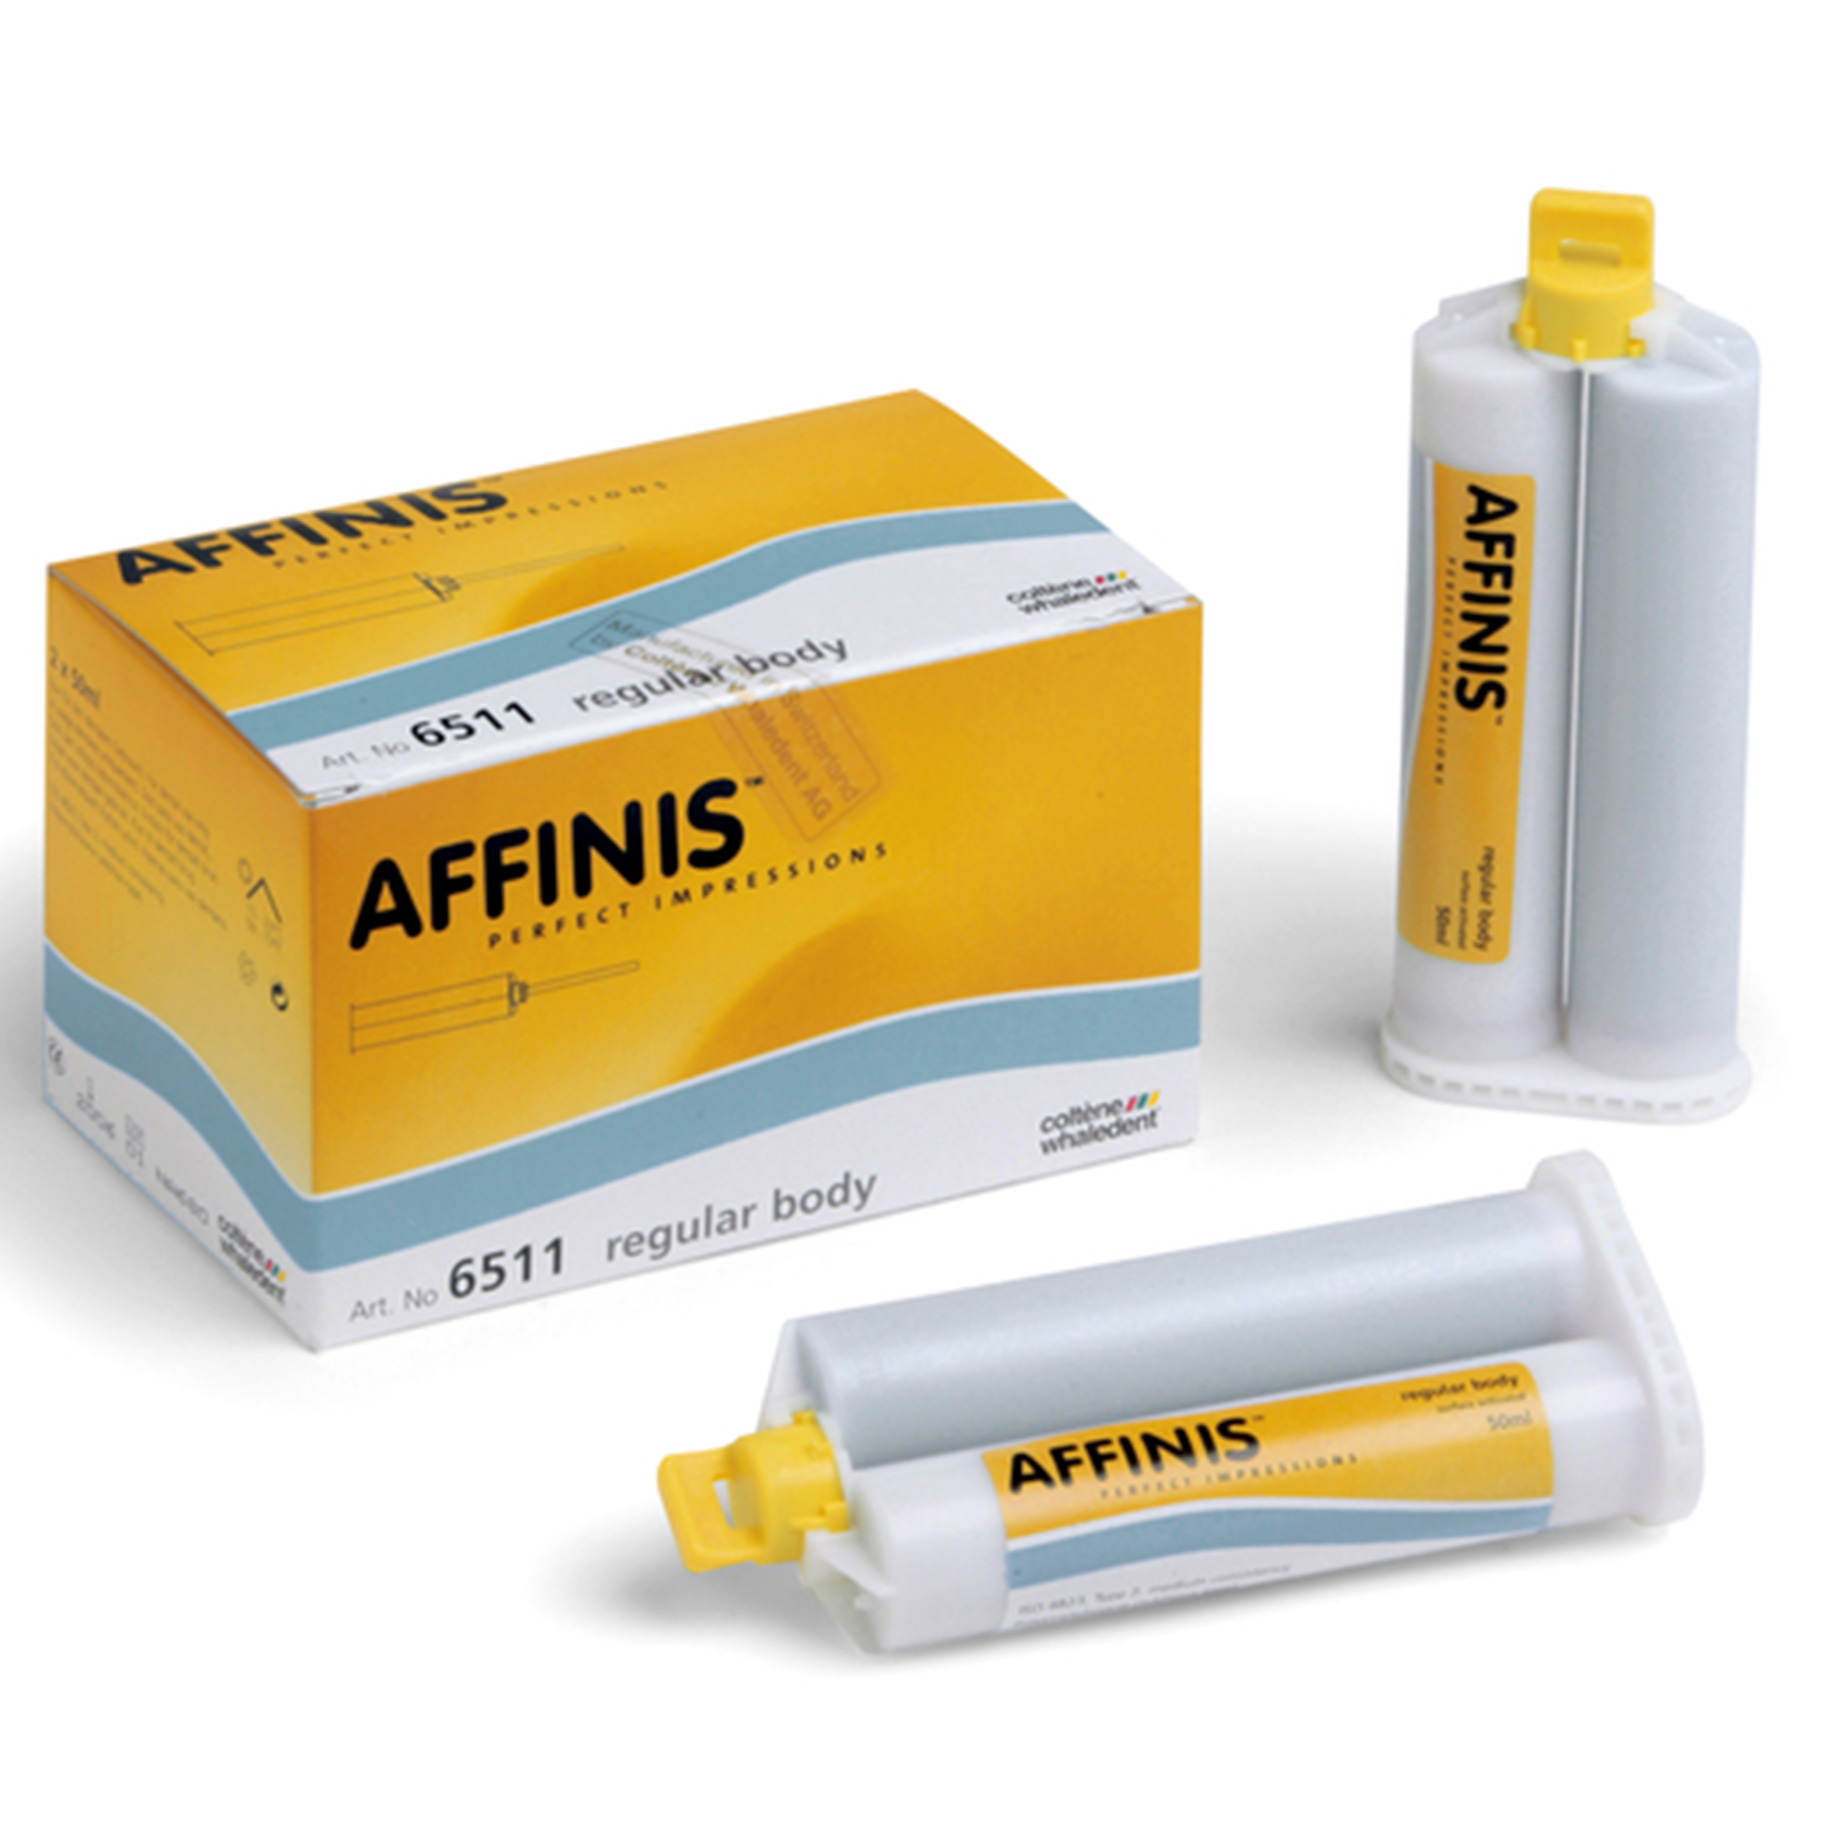 Affinis Impression Material Wash Material - Regular Body Single Pack (Ref. 6511) 